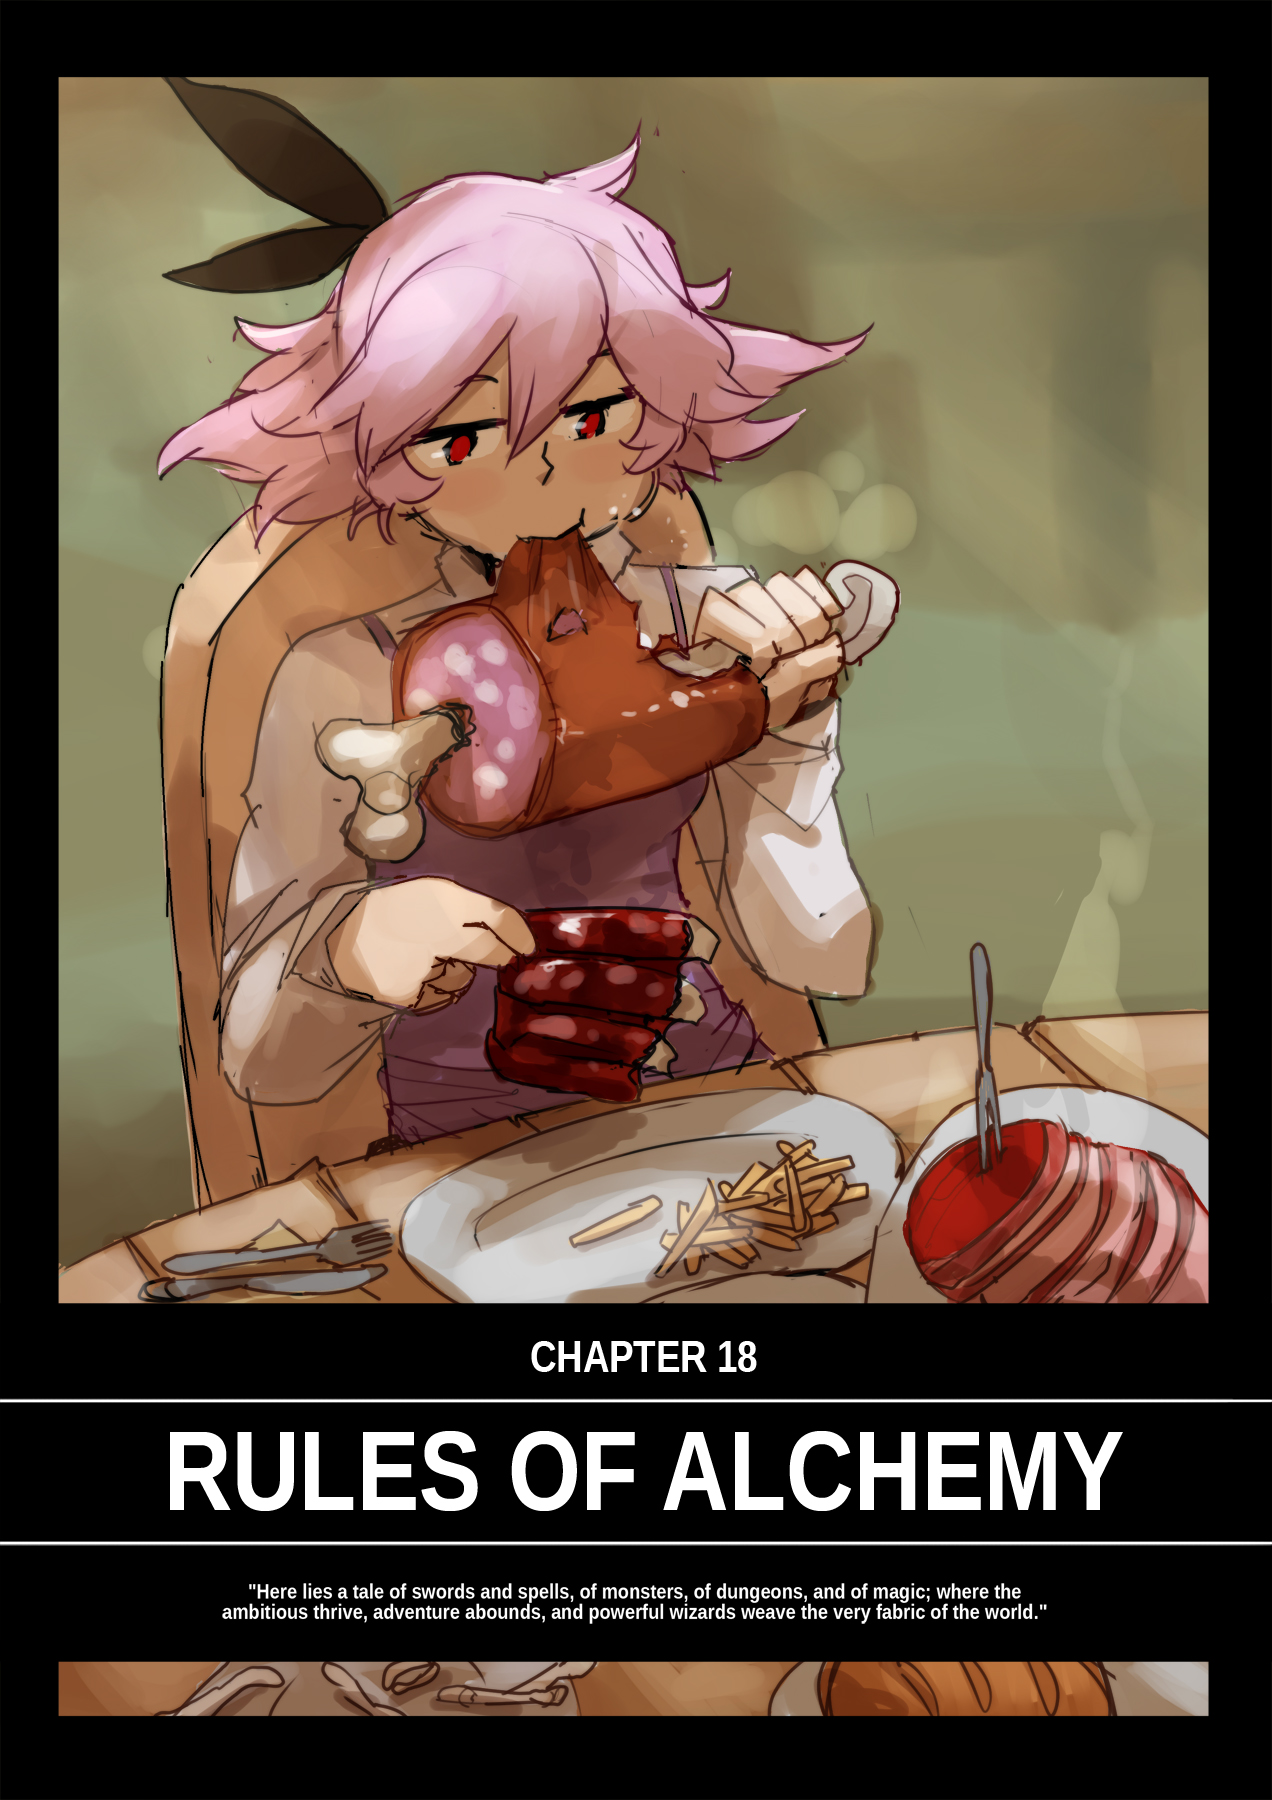 Spellcross Ch. 18 Rules of Alchemy